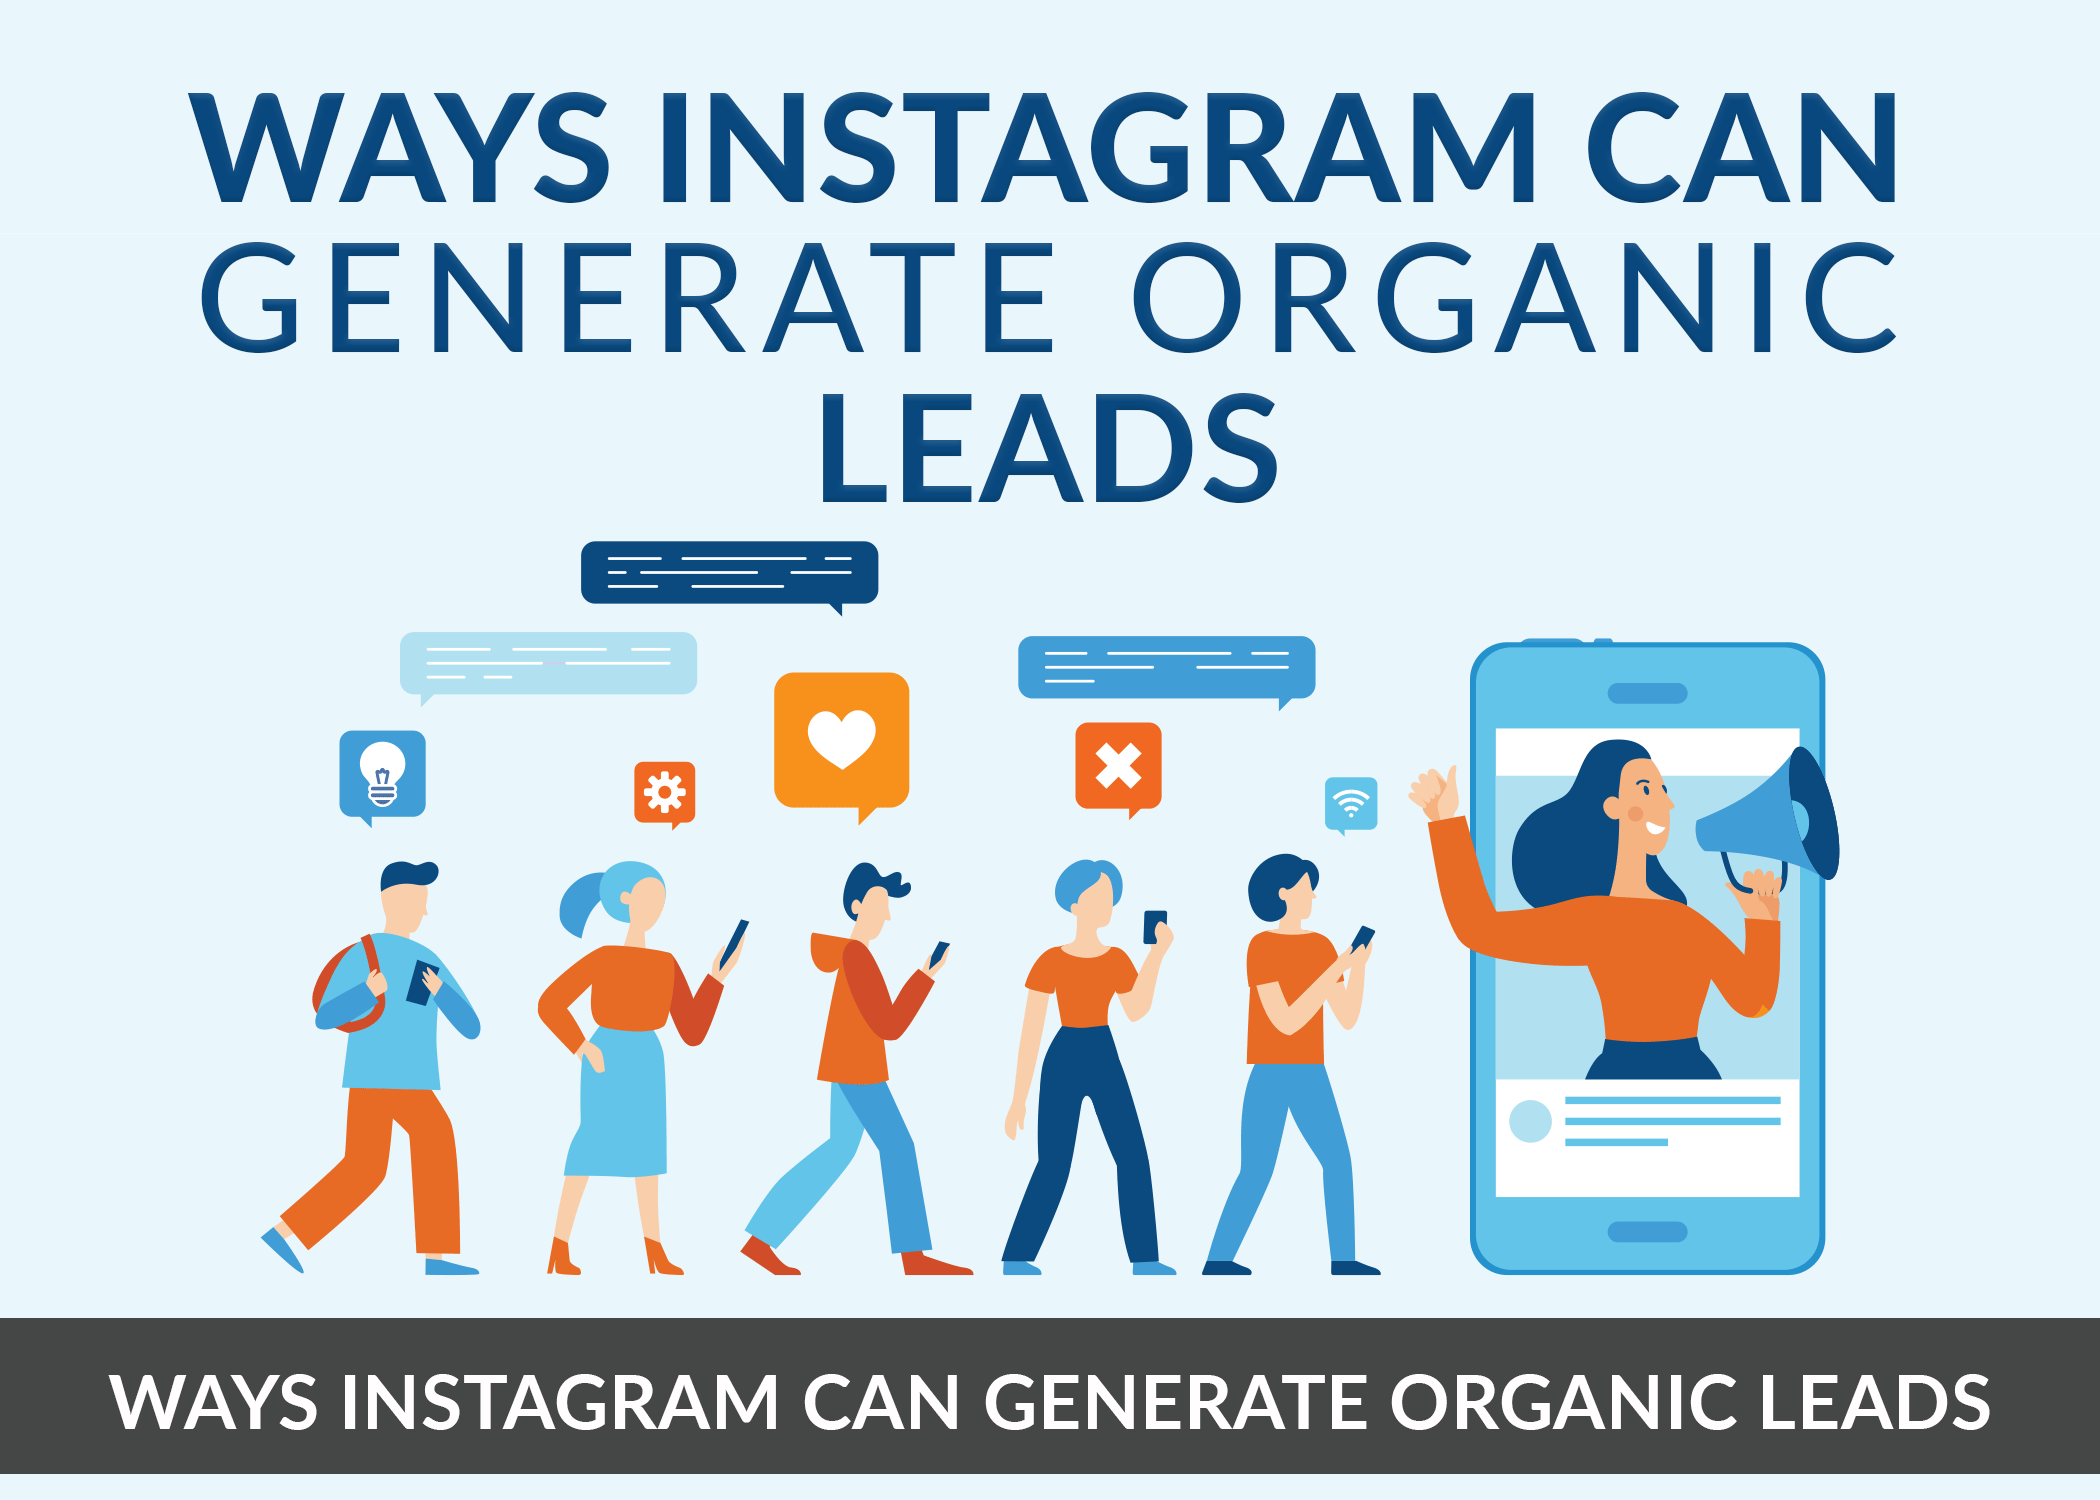 leads organic generate ways instagram